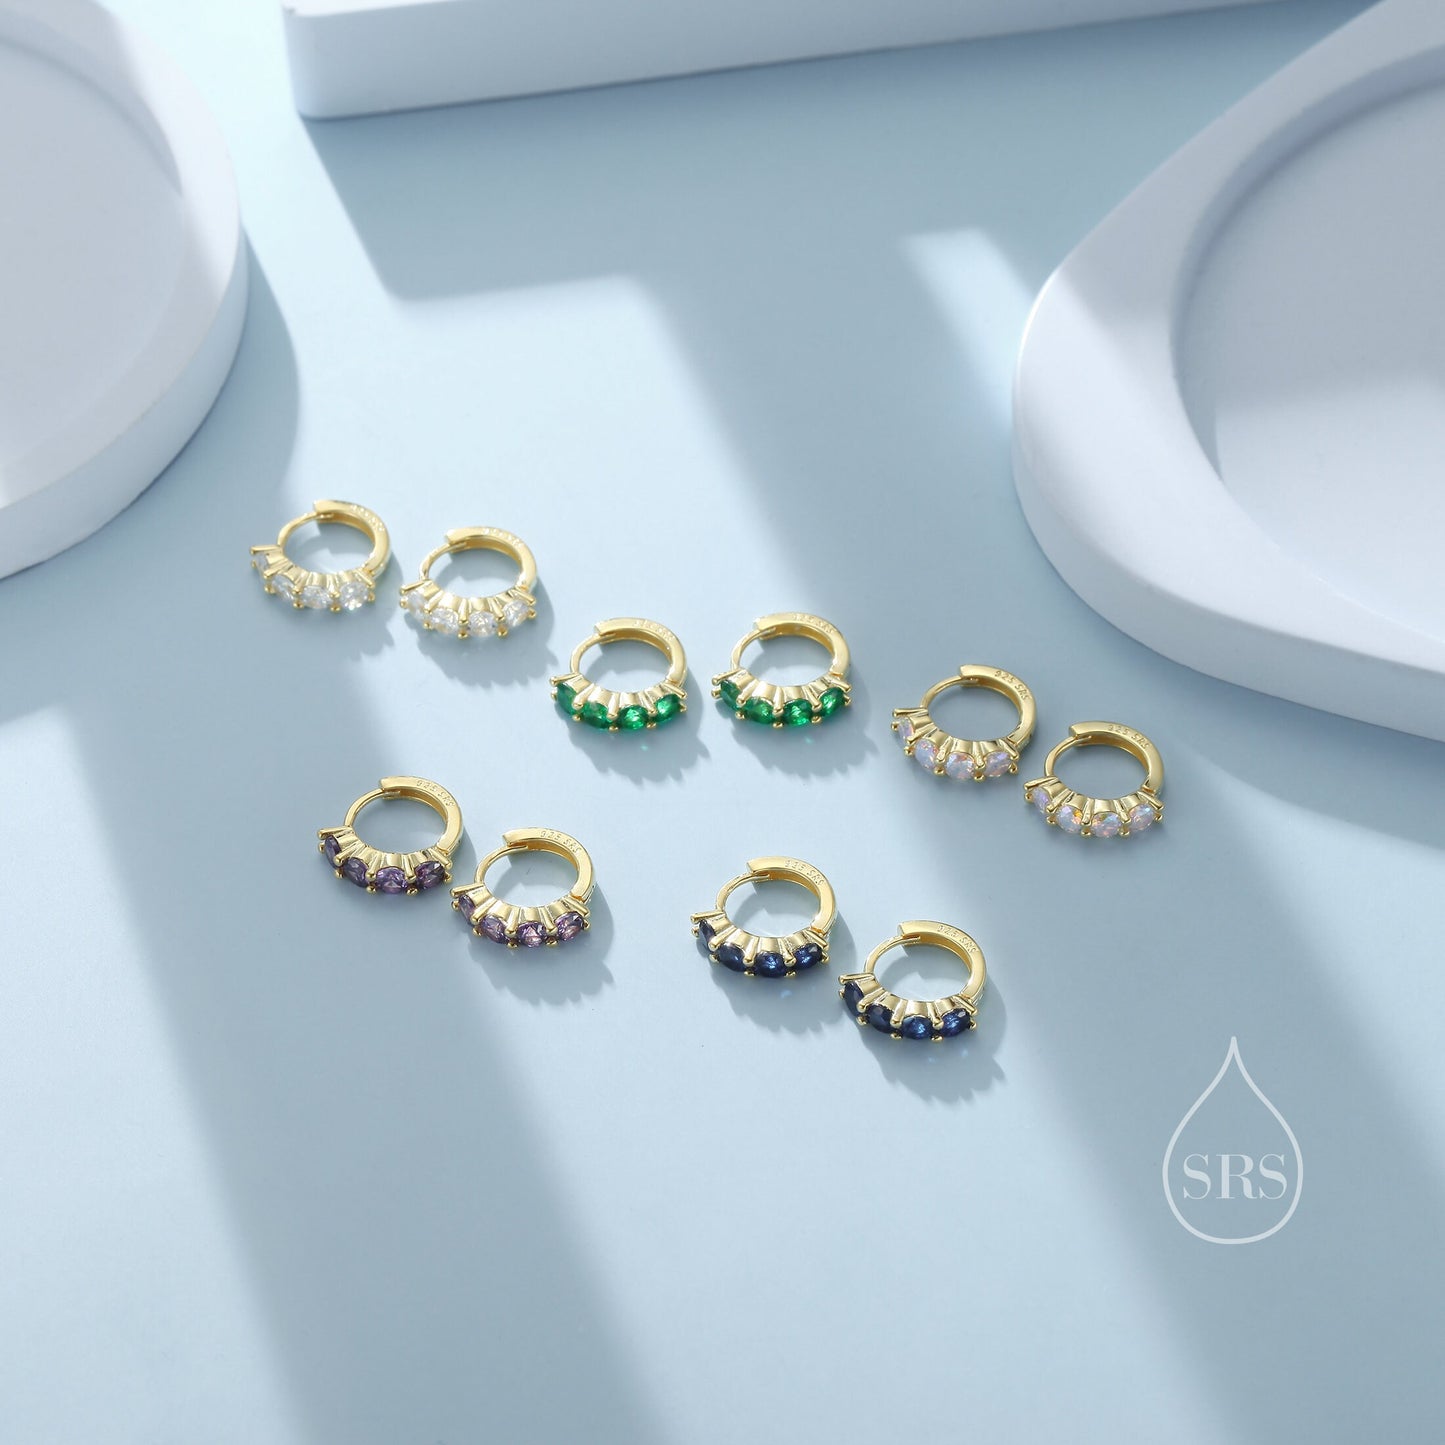 Tiny 6mm Huggie Hoop Earrings in Sterling Silver, Silver or Gold, 4mm Geometric Hoop Earrings, Green, Blue, Purple, Rainbow or Clear CZ